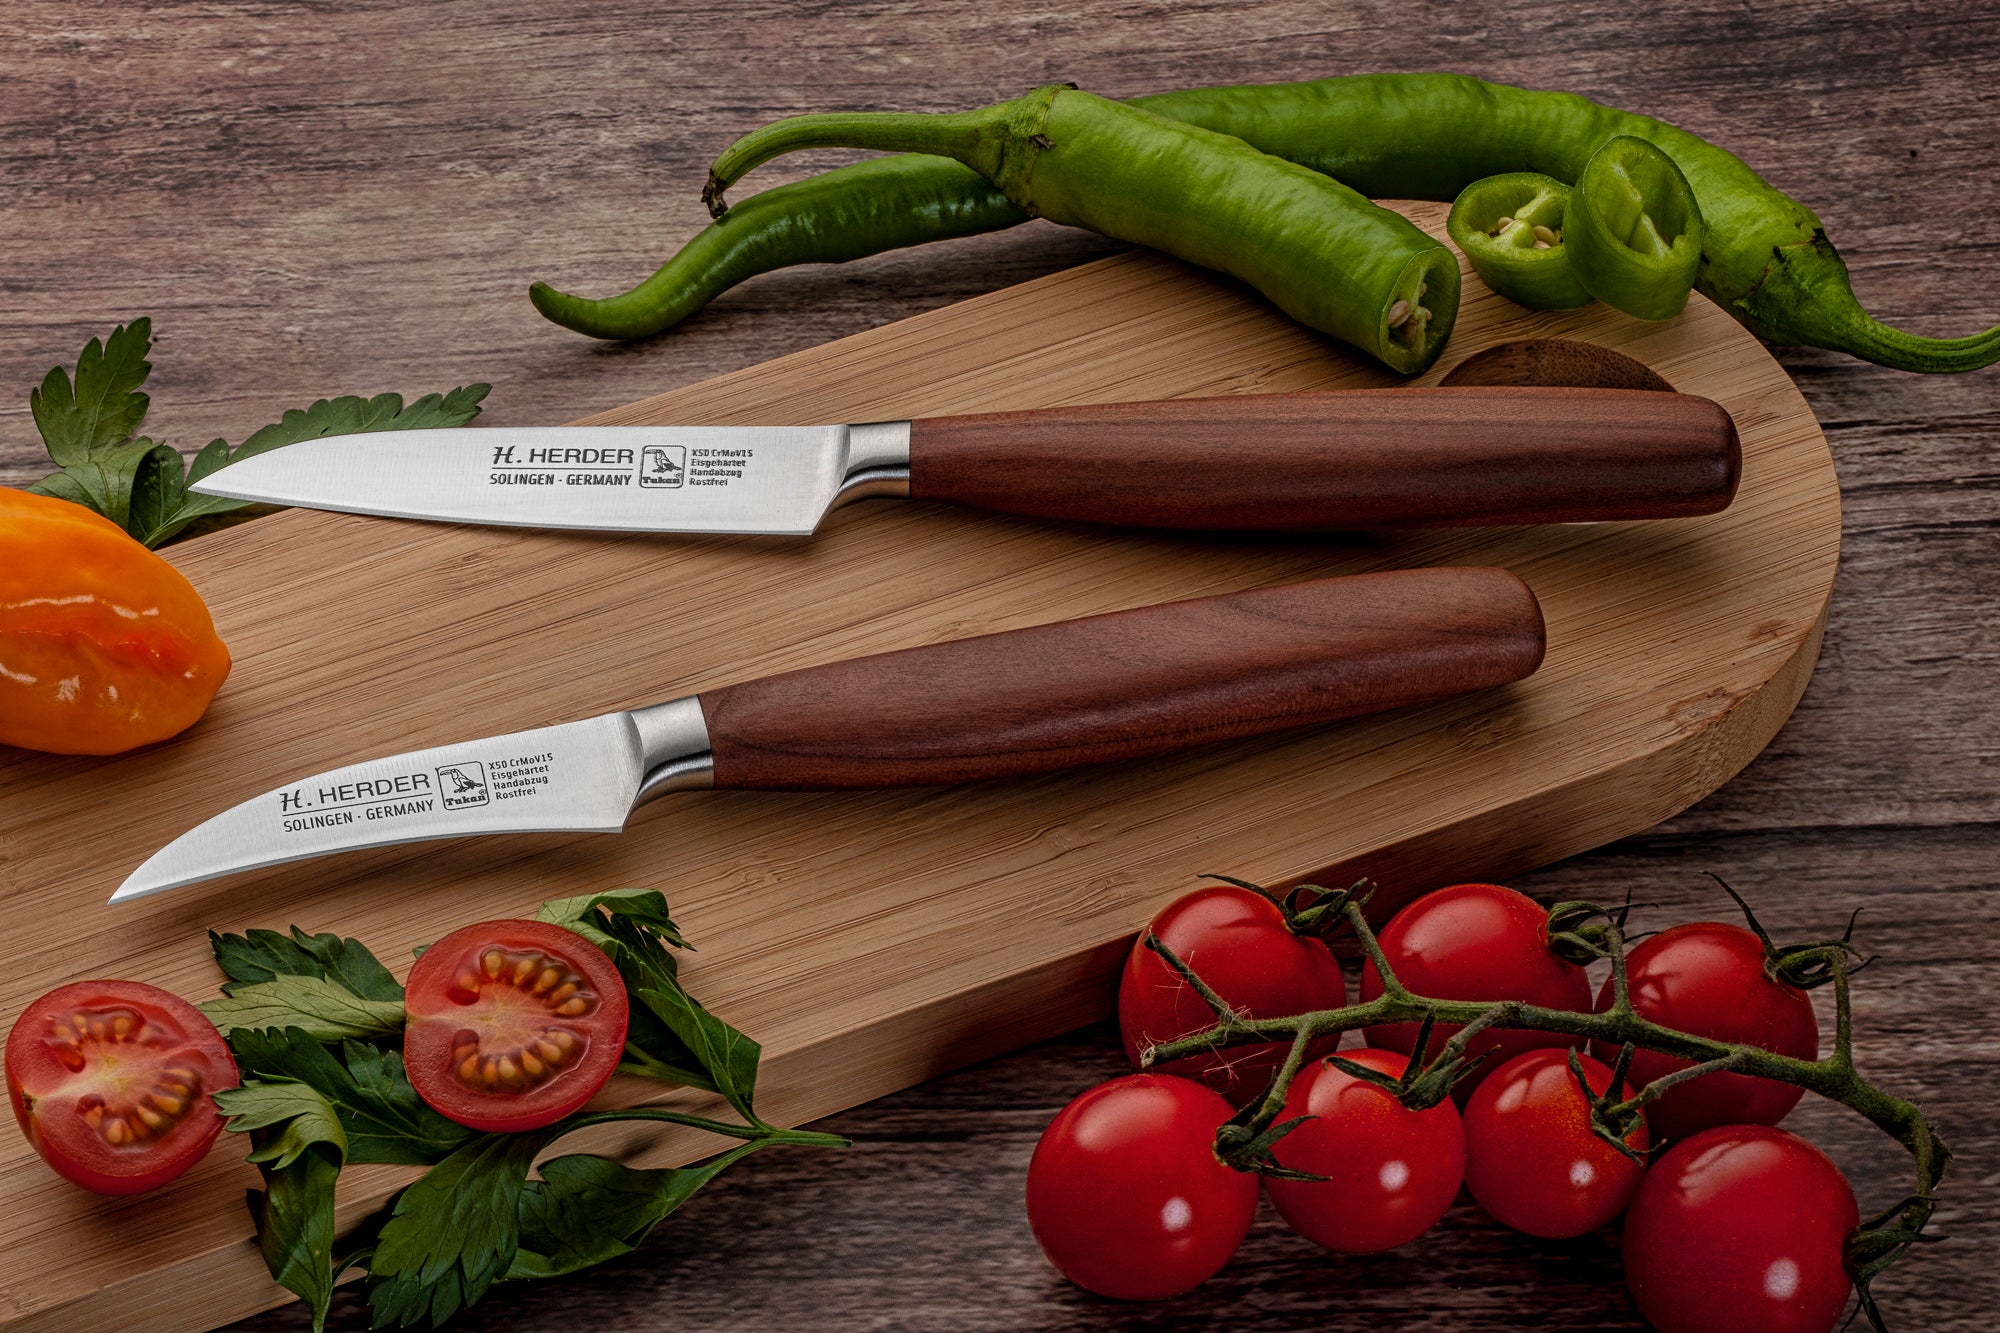 Vegetable knife Eterno, plum wood, blade length 9cm, forged